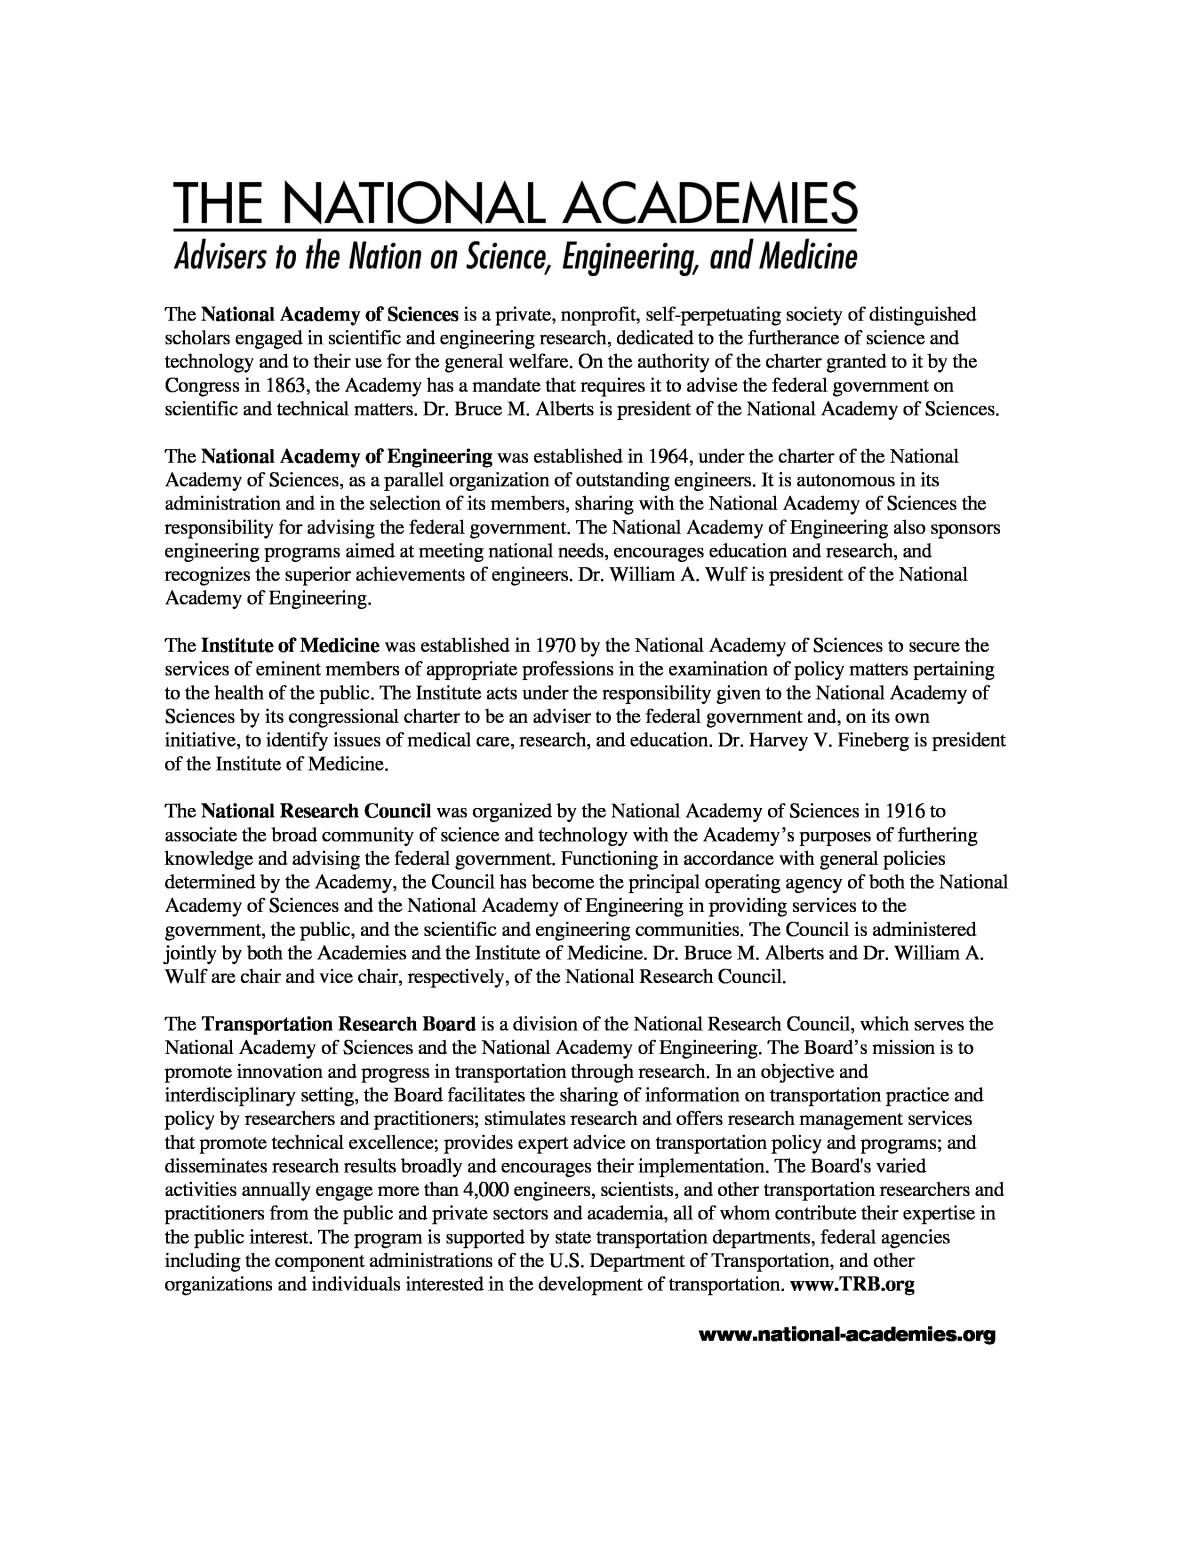 https://nap.nationalacademies.org/books/21957/gif/341.gif